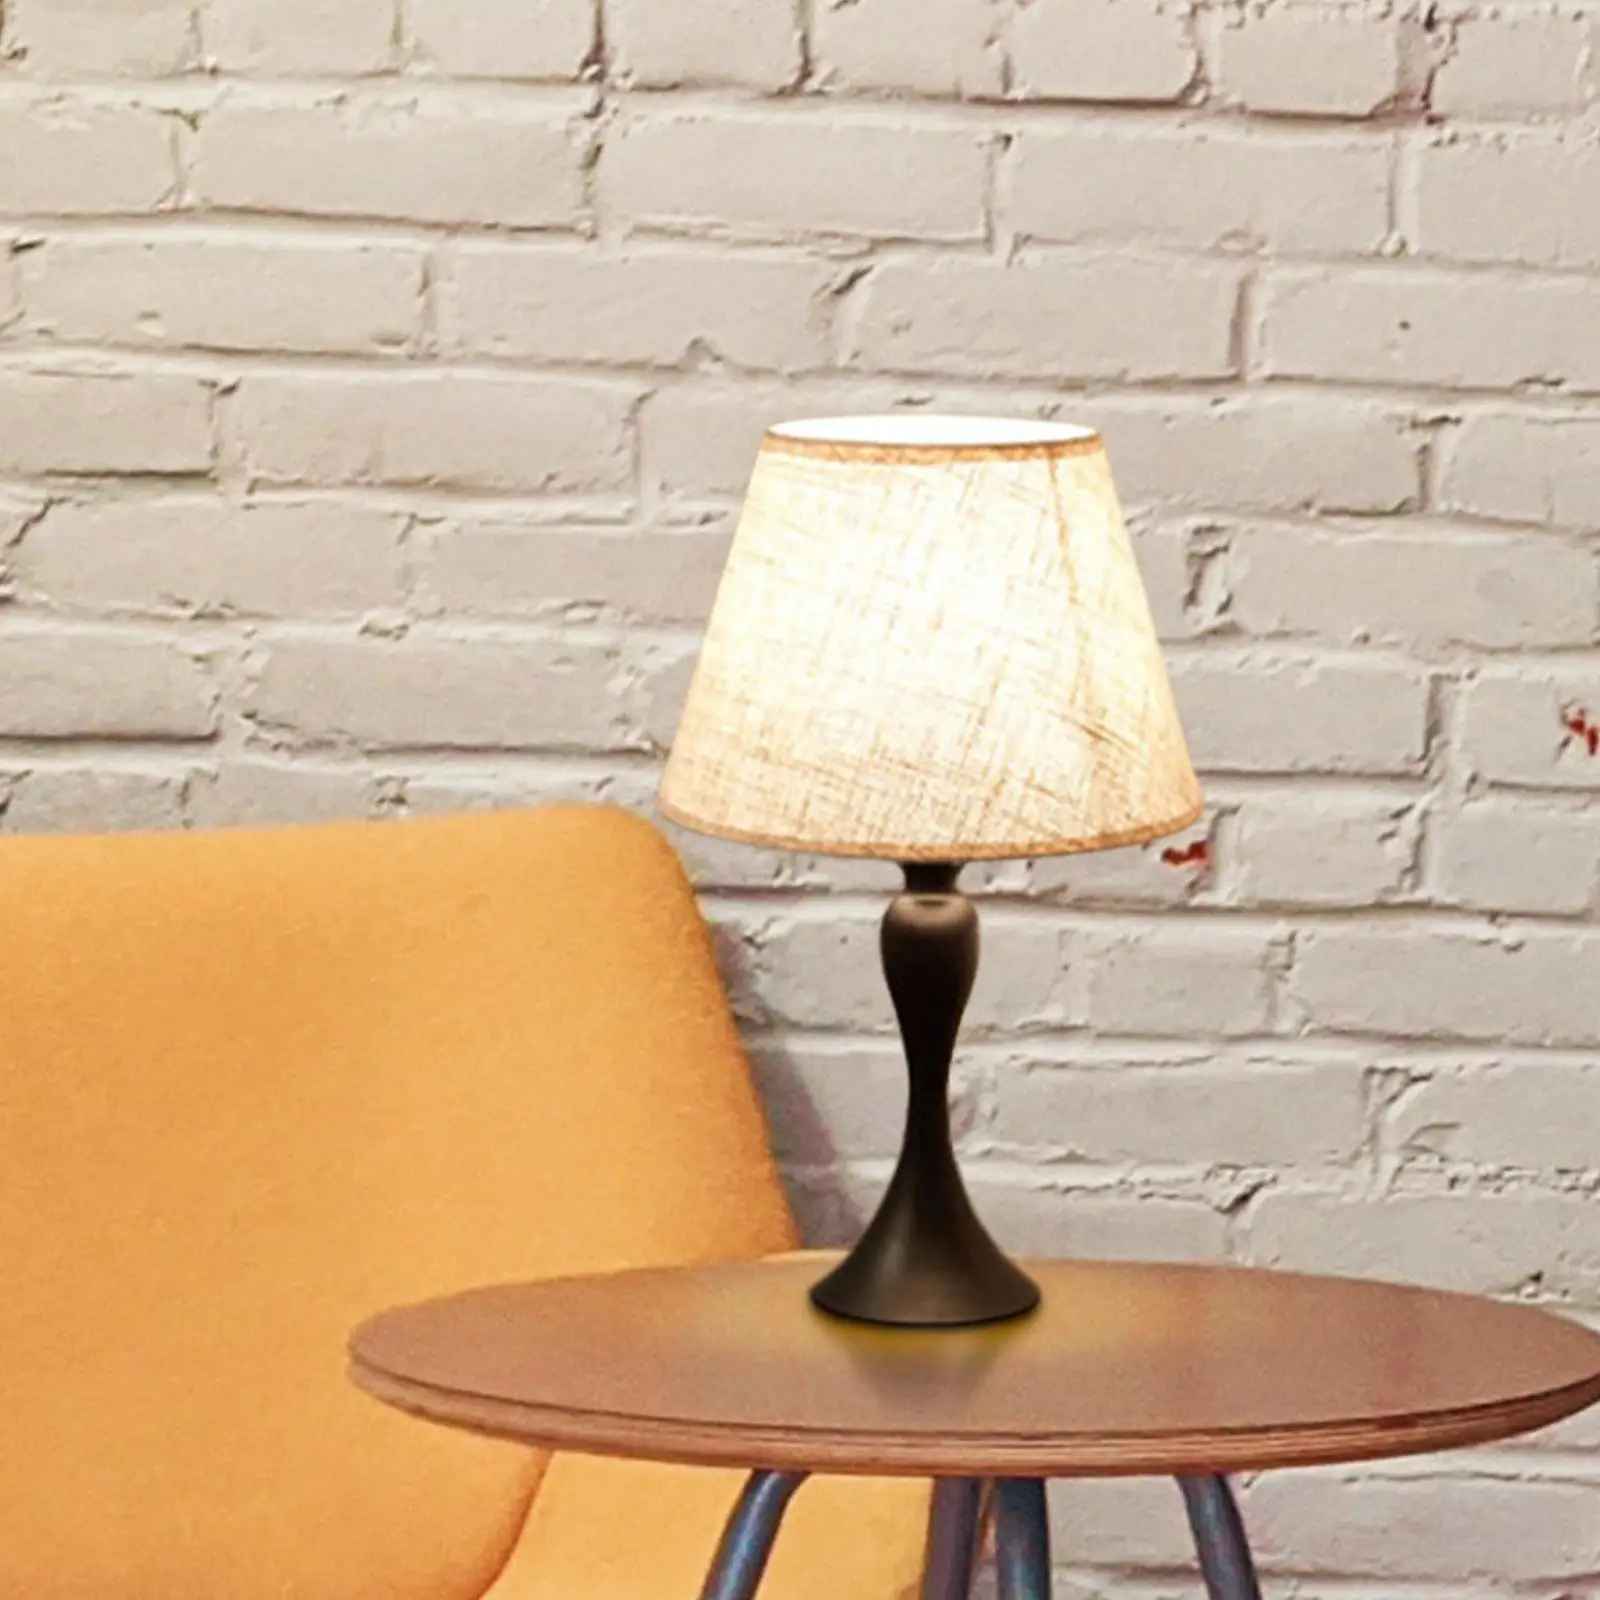 Simple Lantern Table Lamp Desk Light Decorative Romantic for Bar Decoration